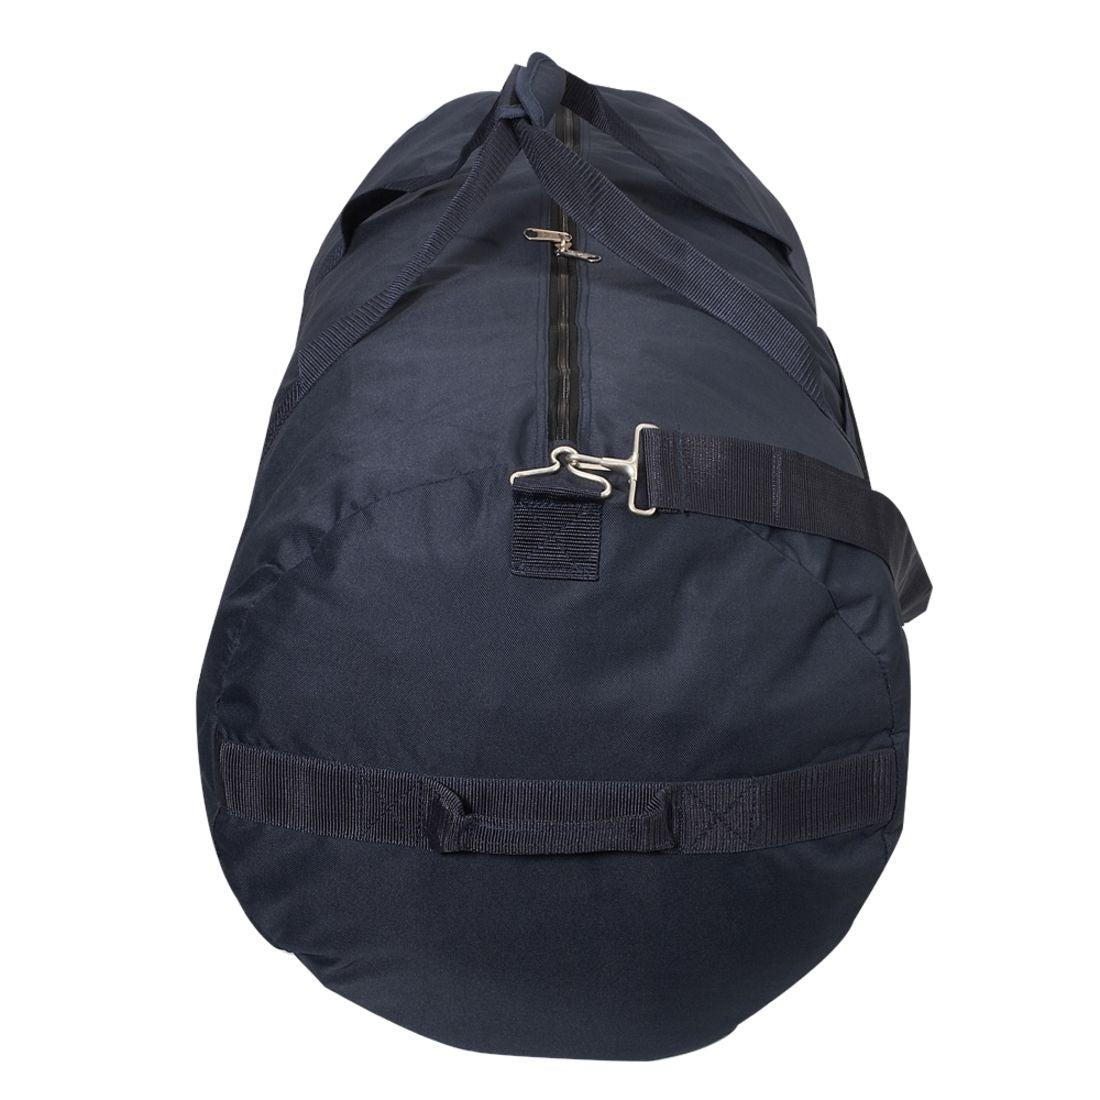 Everest 36-Inch Basic Round Duffel Bag